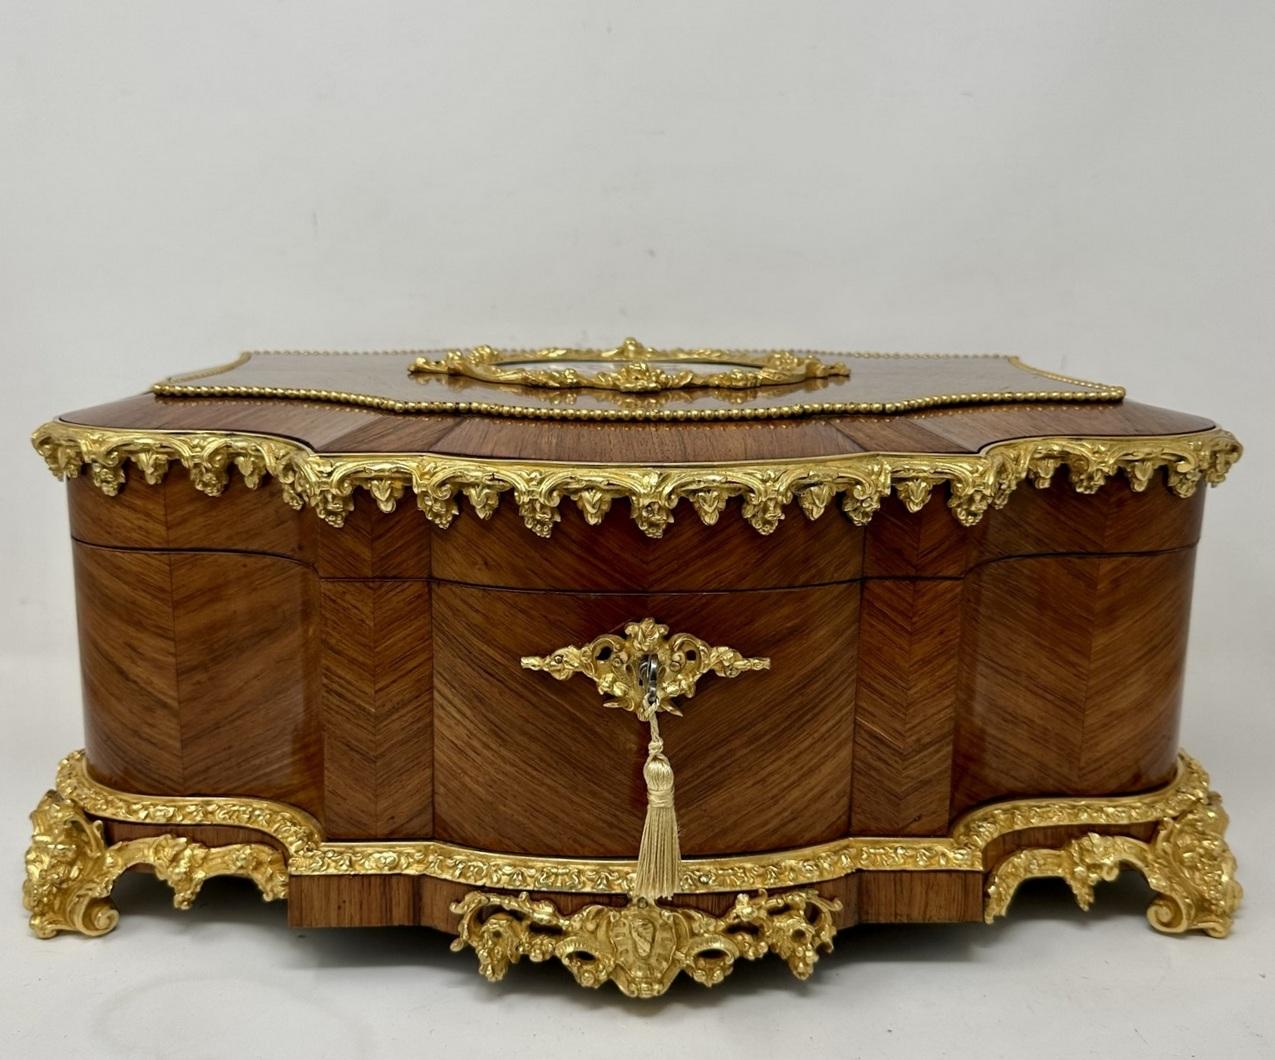 19th Century Antique French Ormolu Kingwood Sevres Casket Jewelry Box by Vervelle Audot Paris